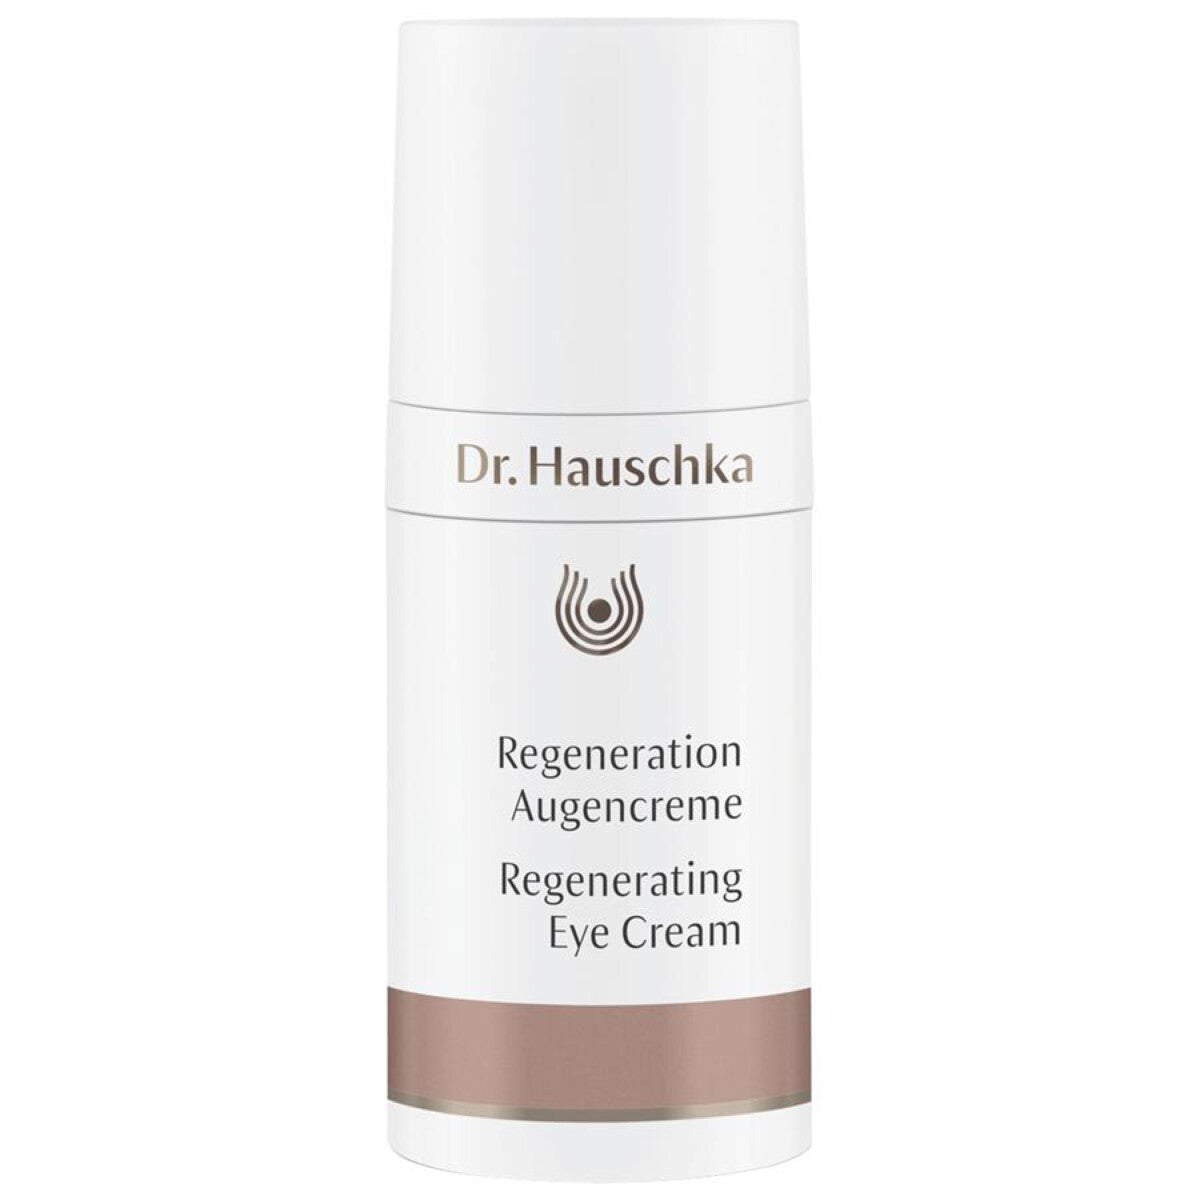 DR. HAUSCHKA Regeneration Augencreme - 15 ml